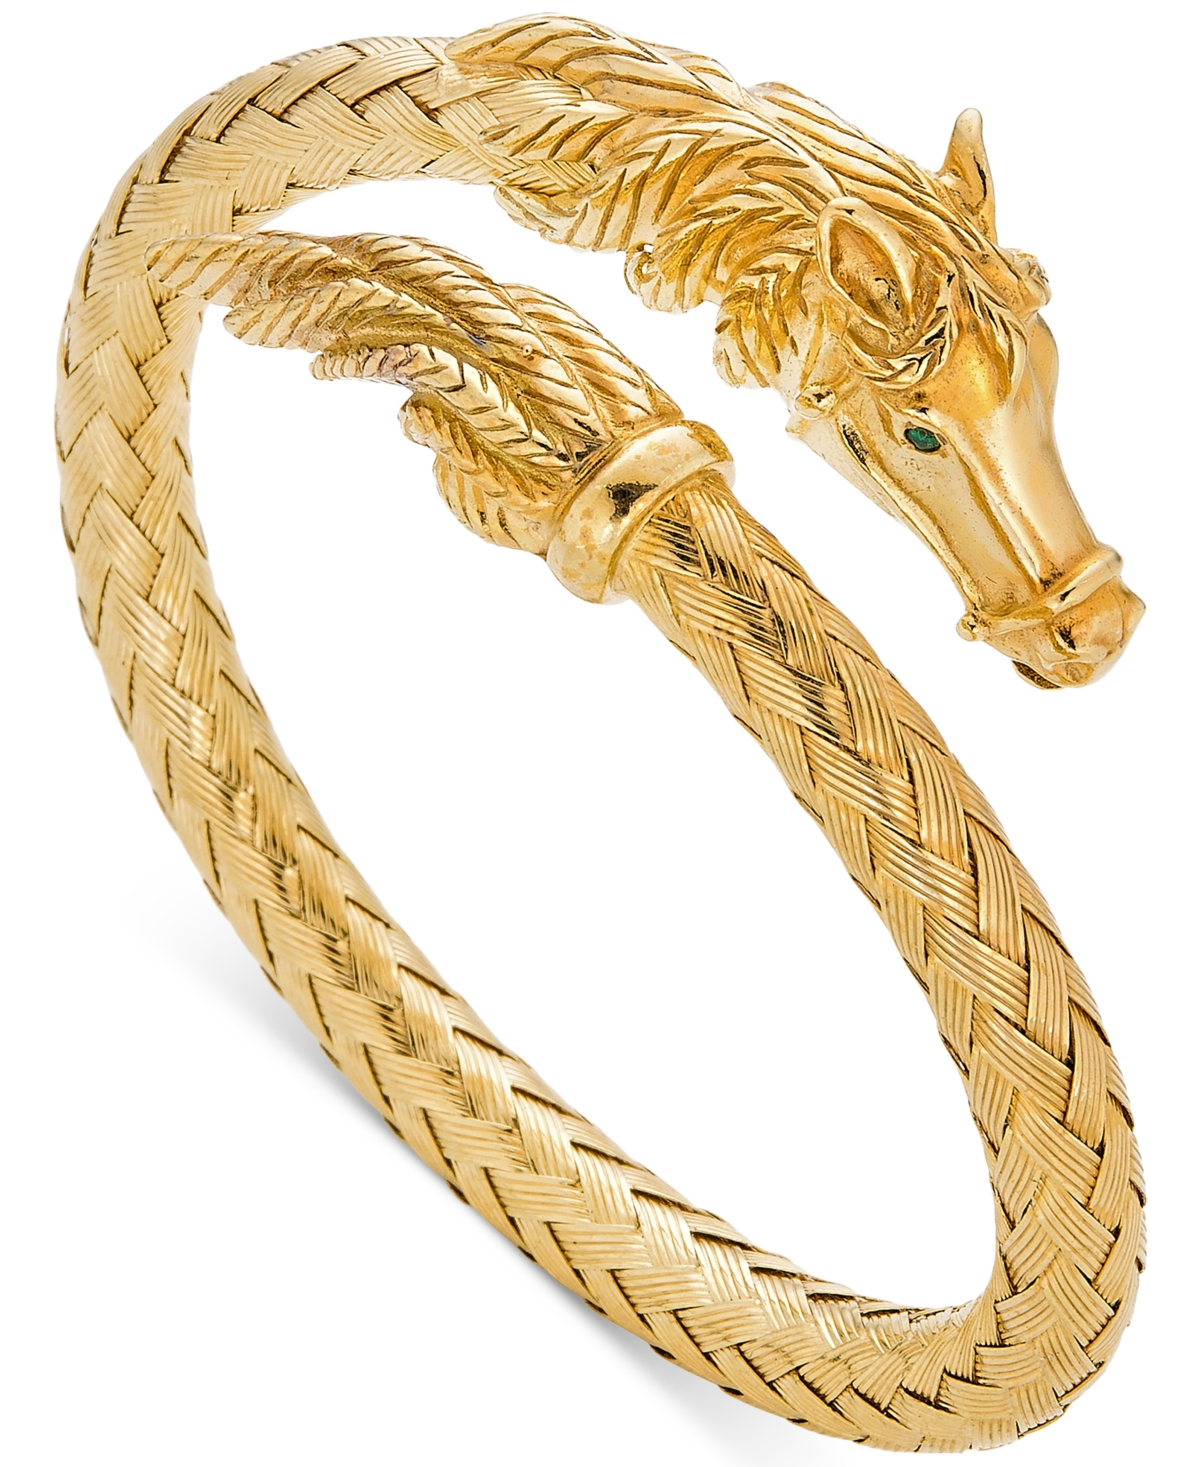 Woven Horse Bangle Bracelet in 14k Gold Vermeil - Yellow Gold